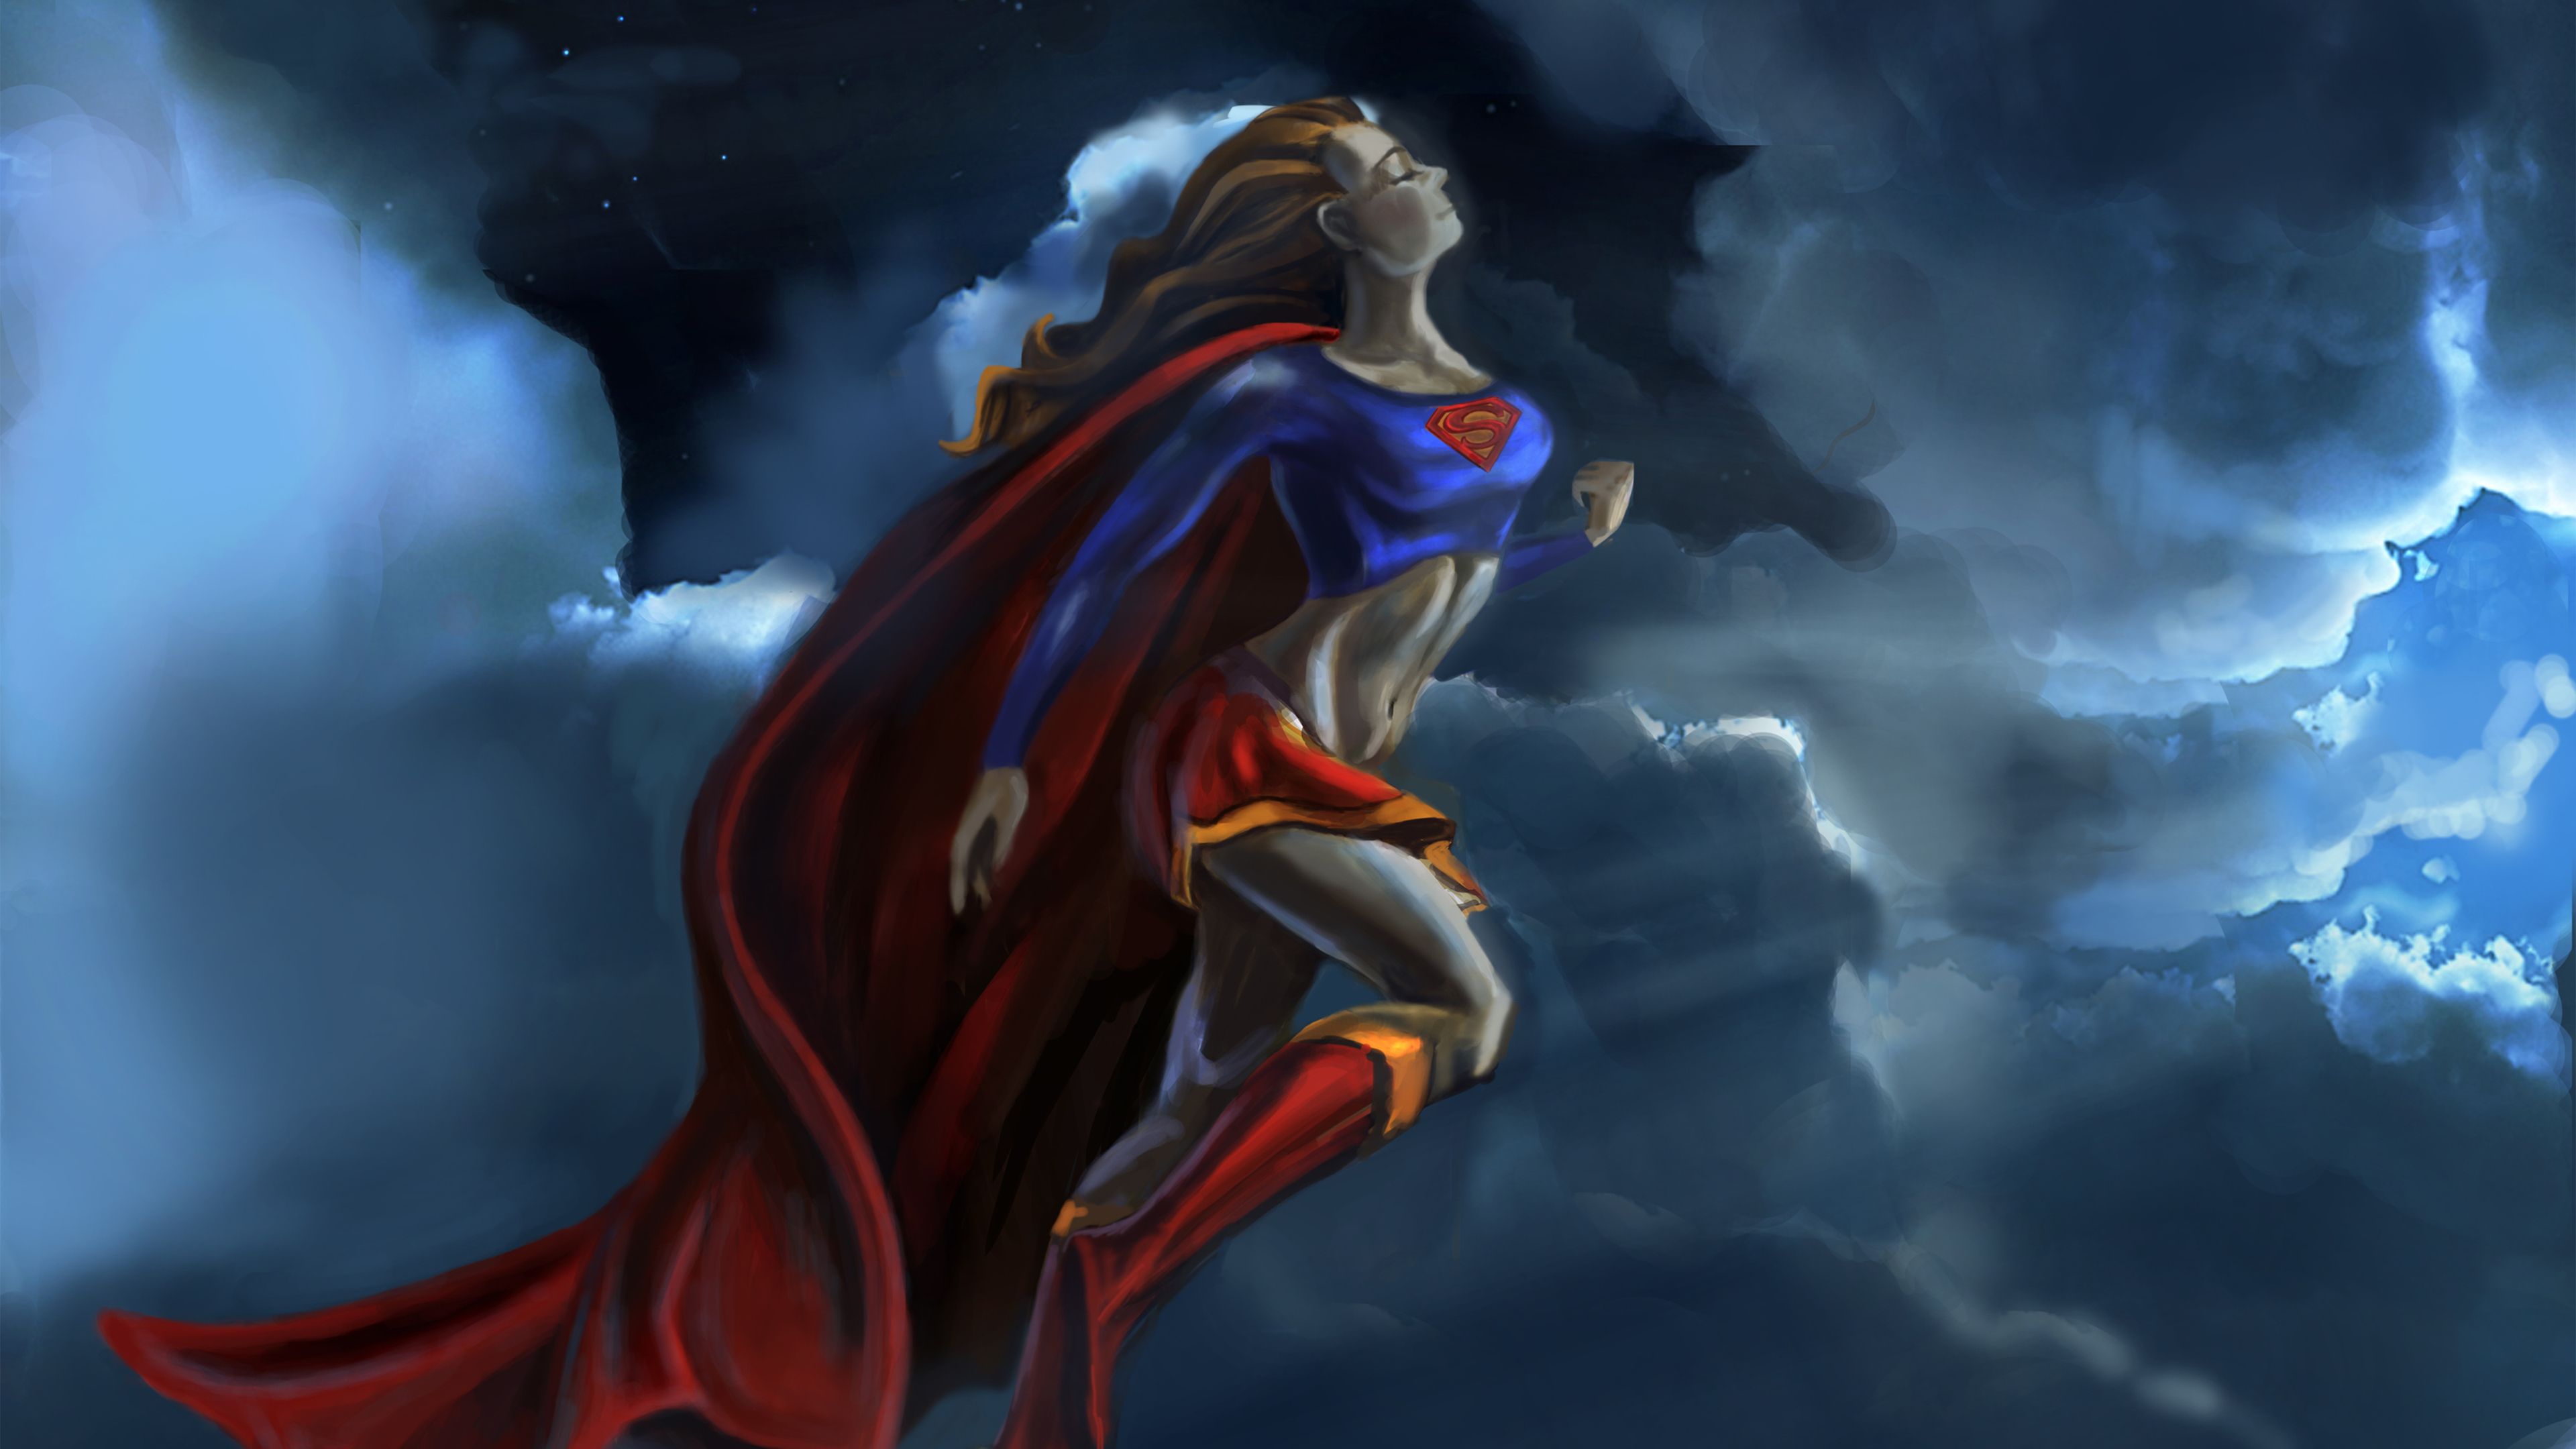 Supergirl 4K Digital Art Wallpapers